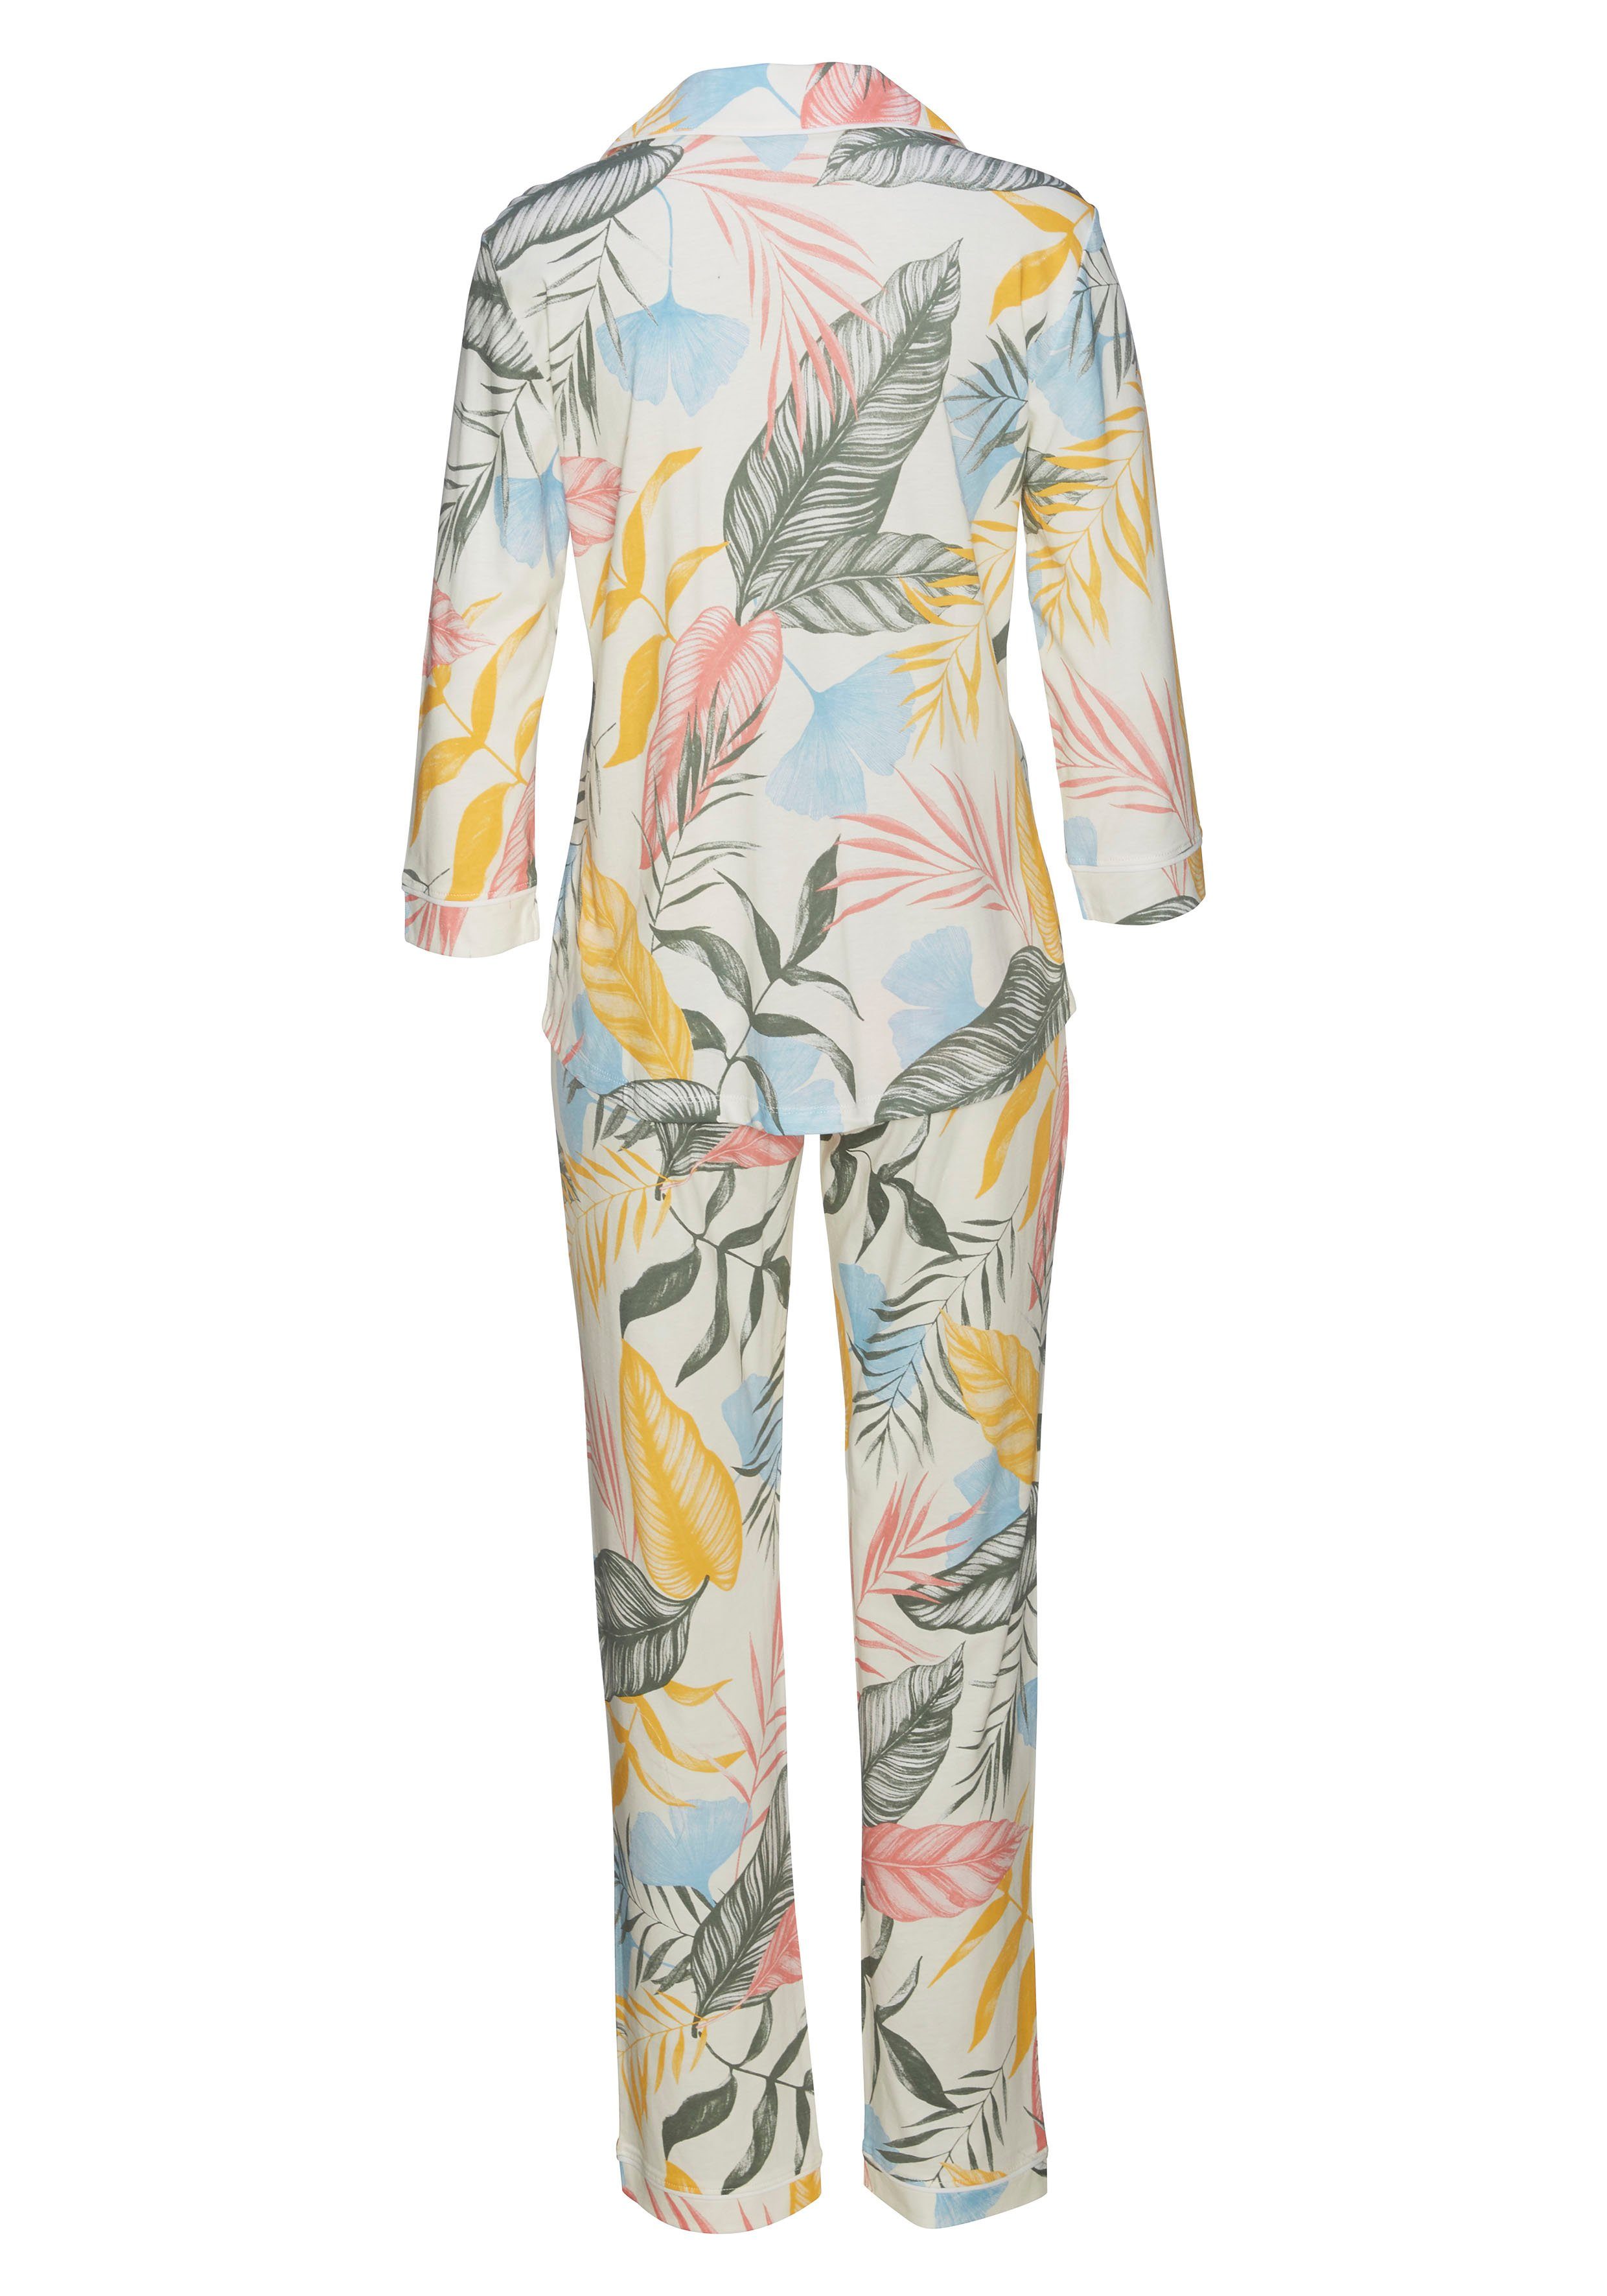 Vivance Dreams gemustert-allover floralem mit Druck Pyjama